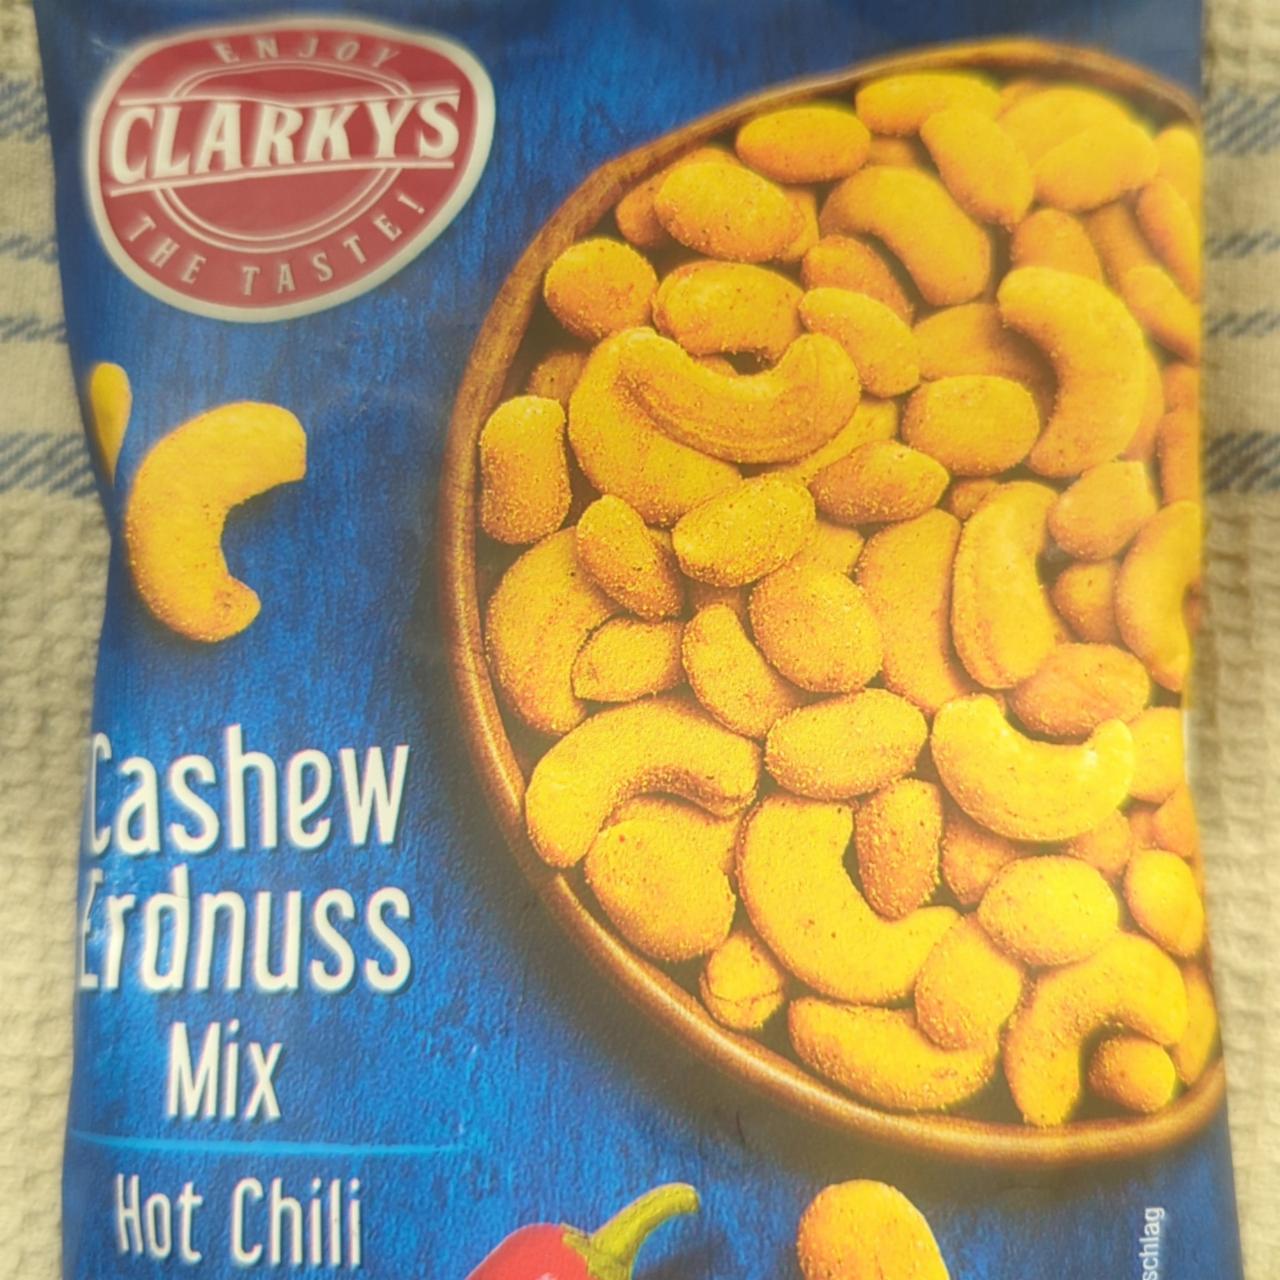 Fotografie - Cashew Erdnuss Mix Hot Chili Clarkys